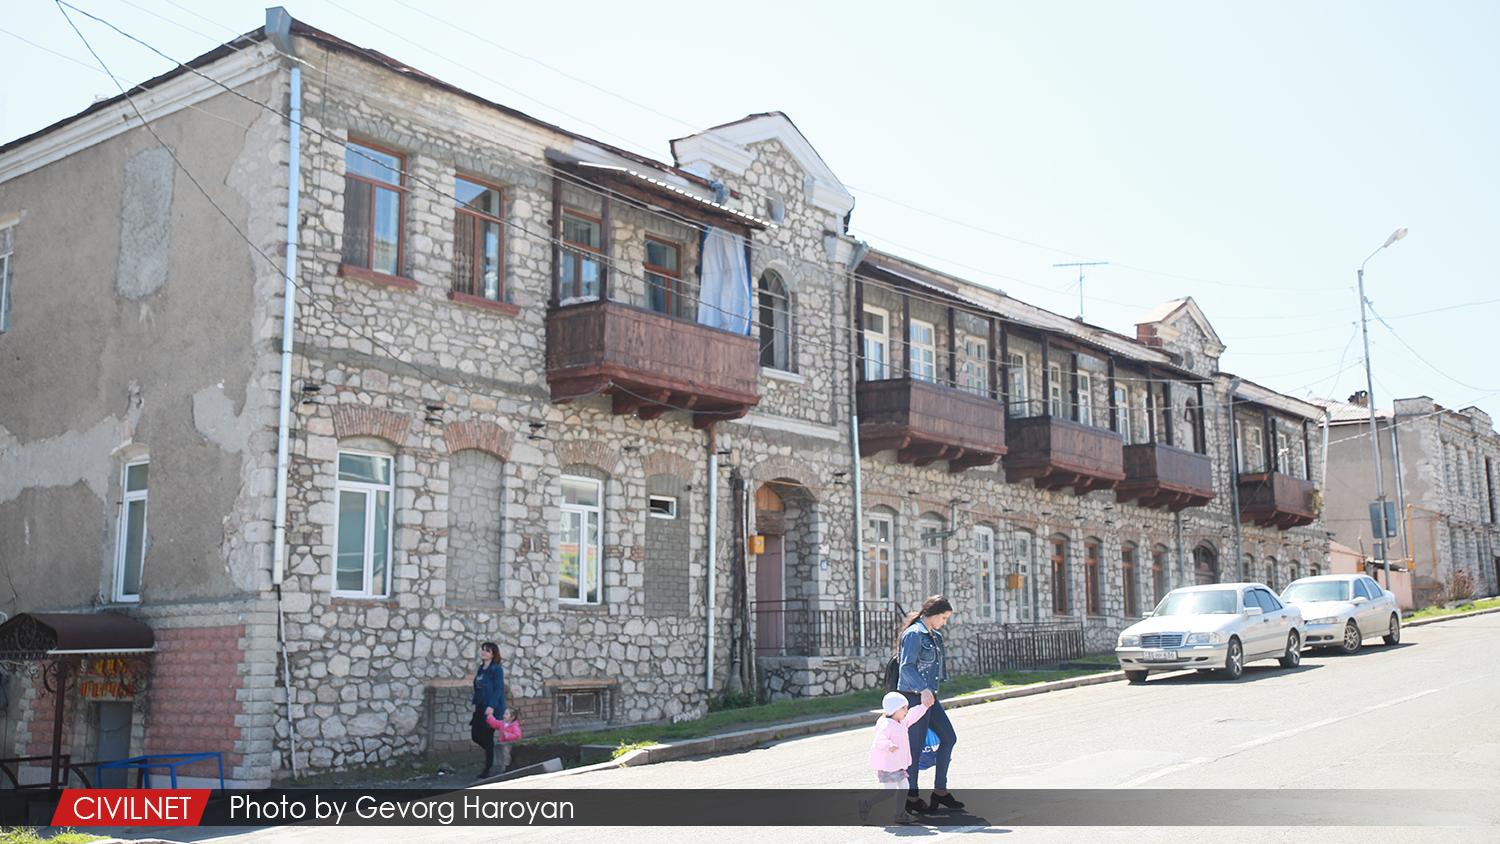 Coronavirus Pandemic Presents Distinct Problems for Nagorno-Karabakh, Underscores Dependence on Neighbors